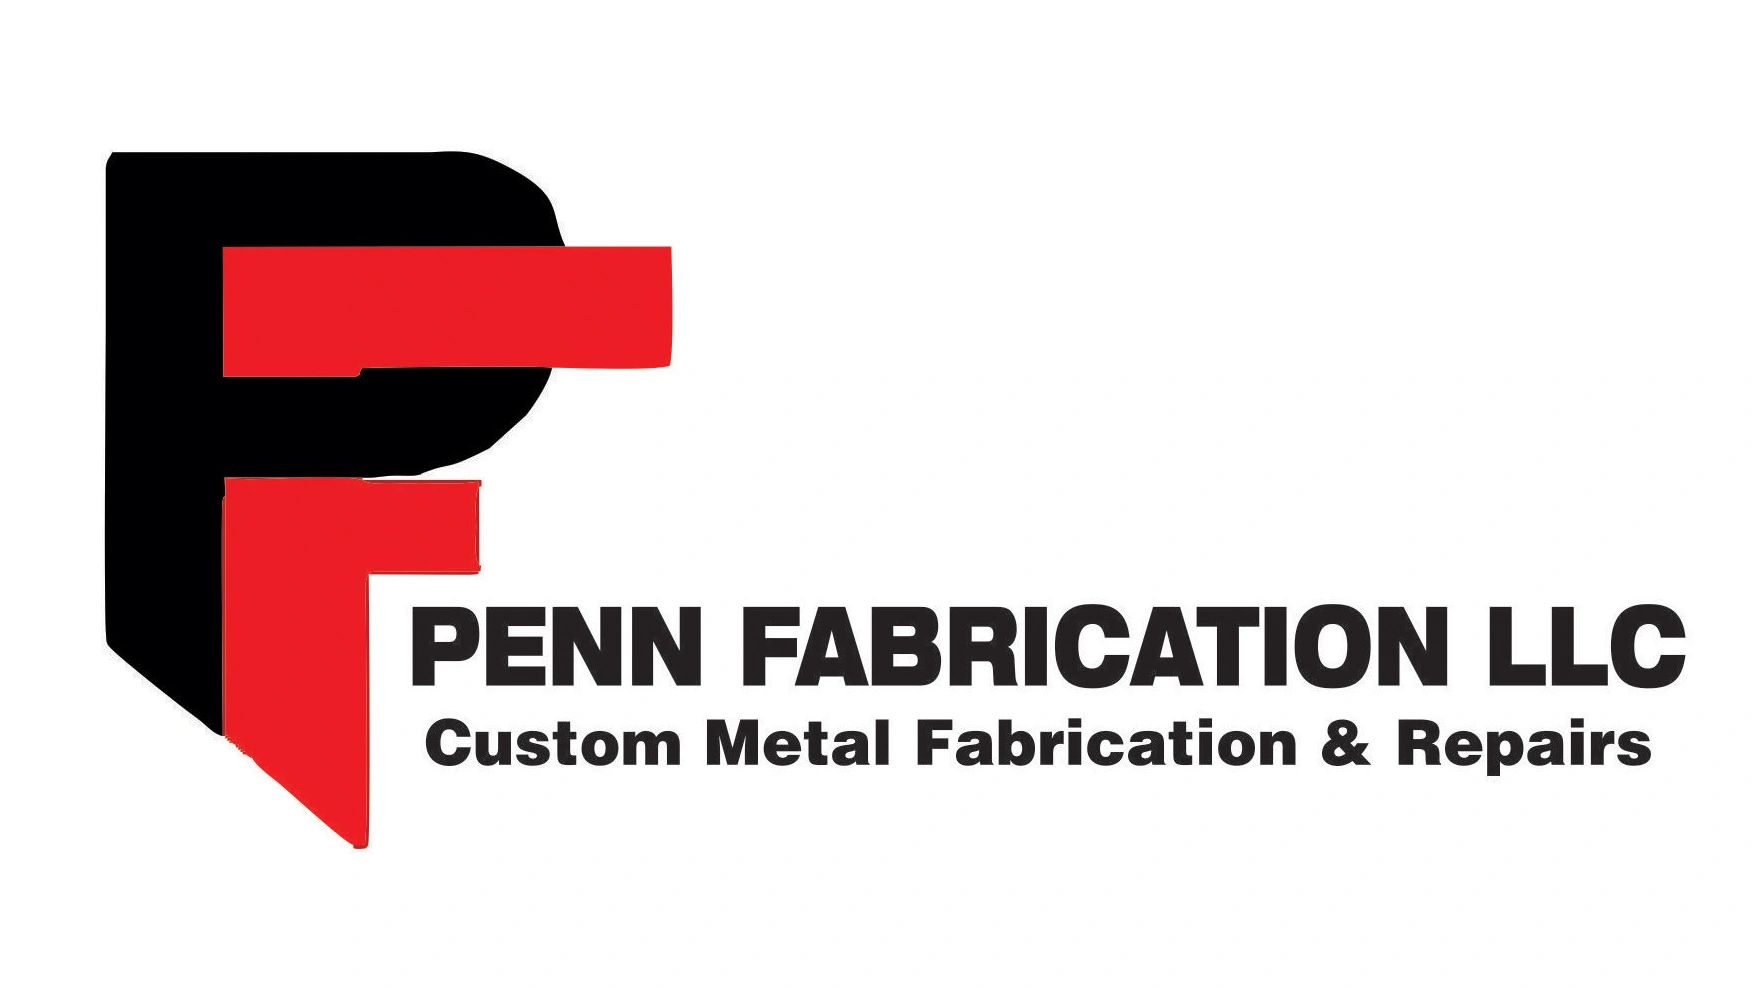 Penn Fabrication LLC